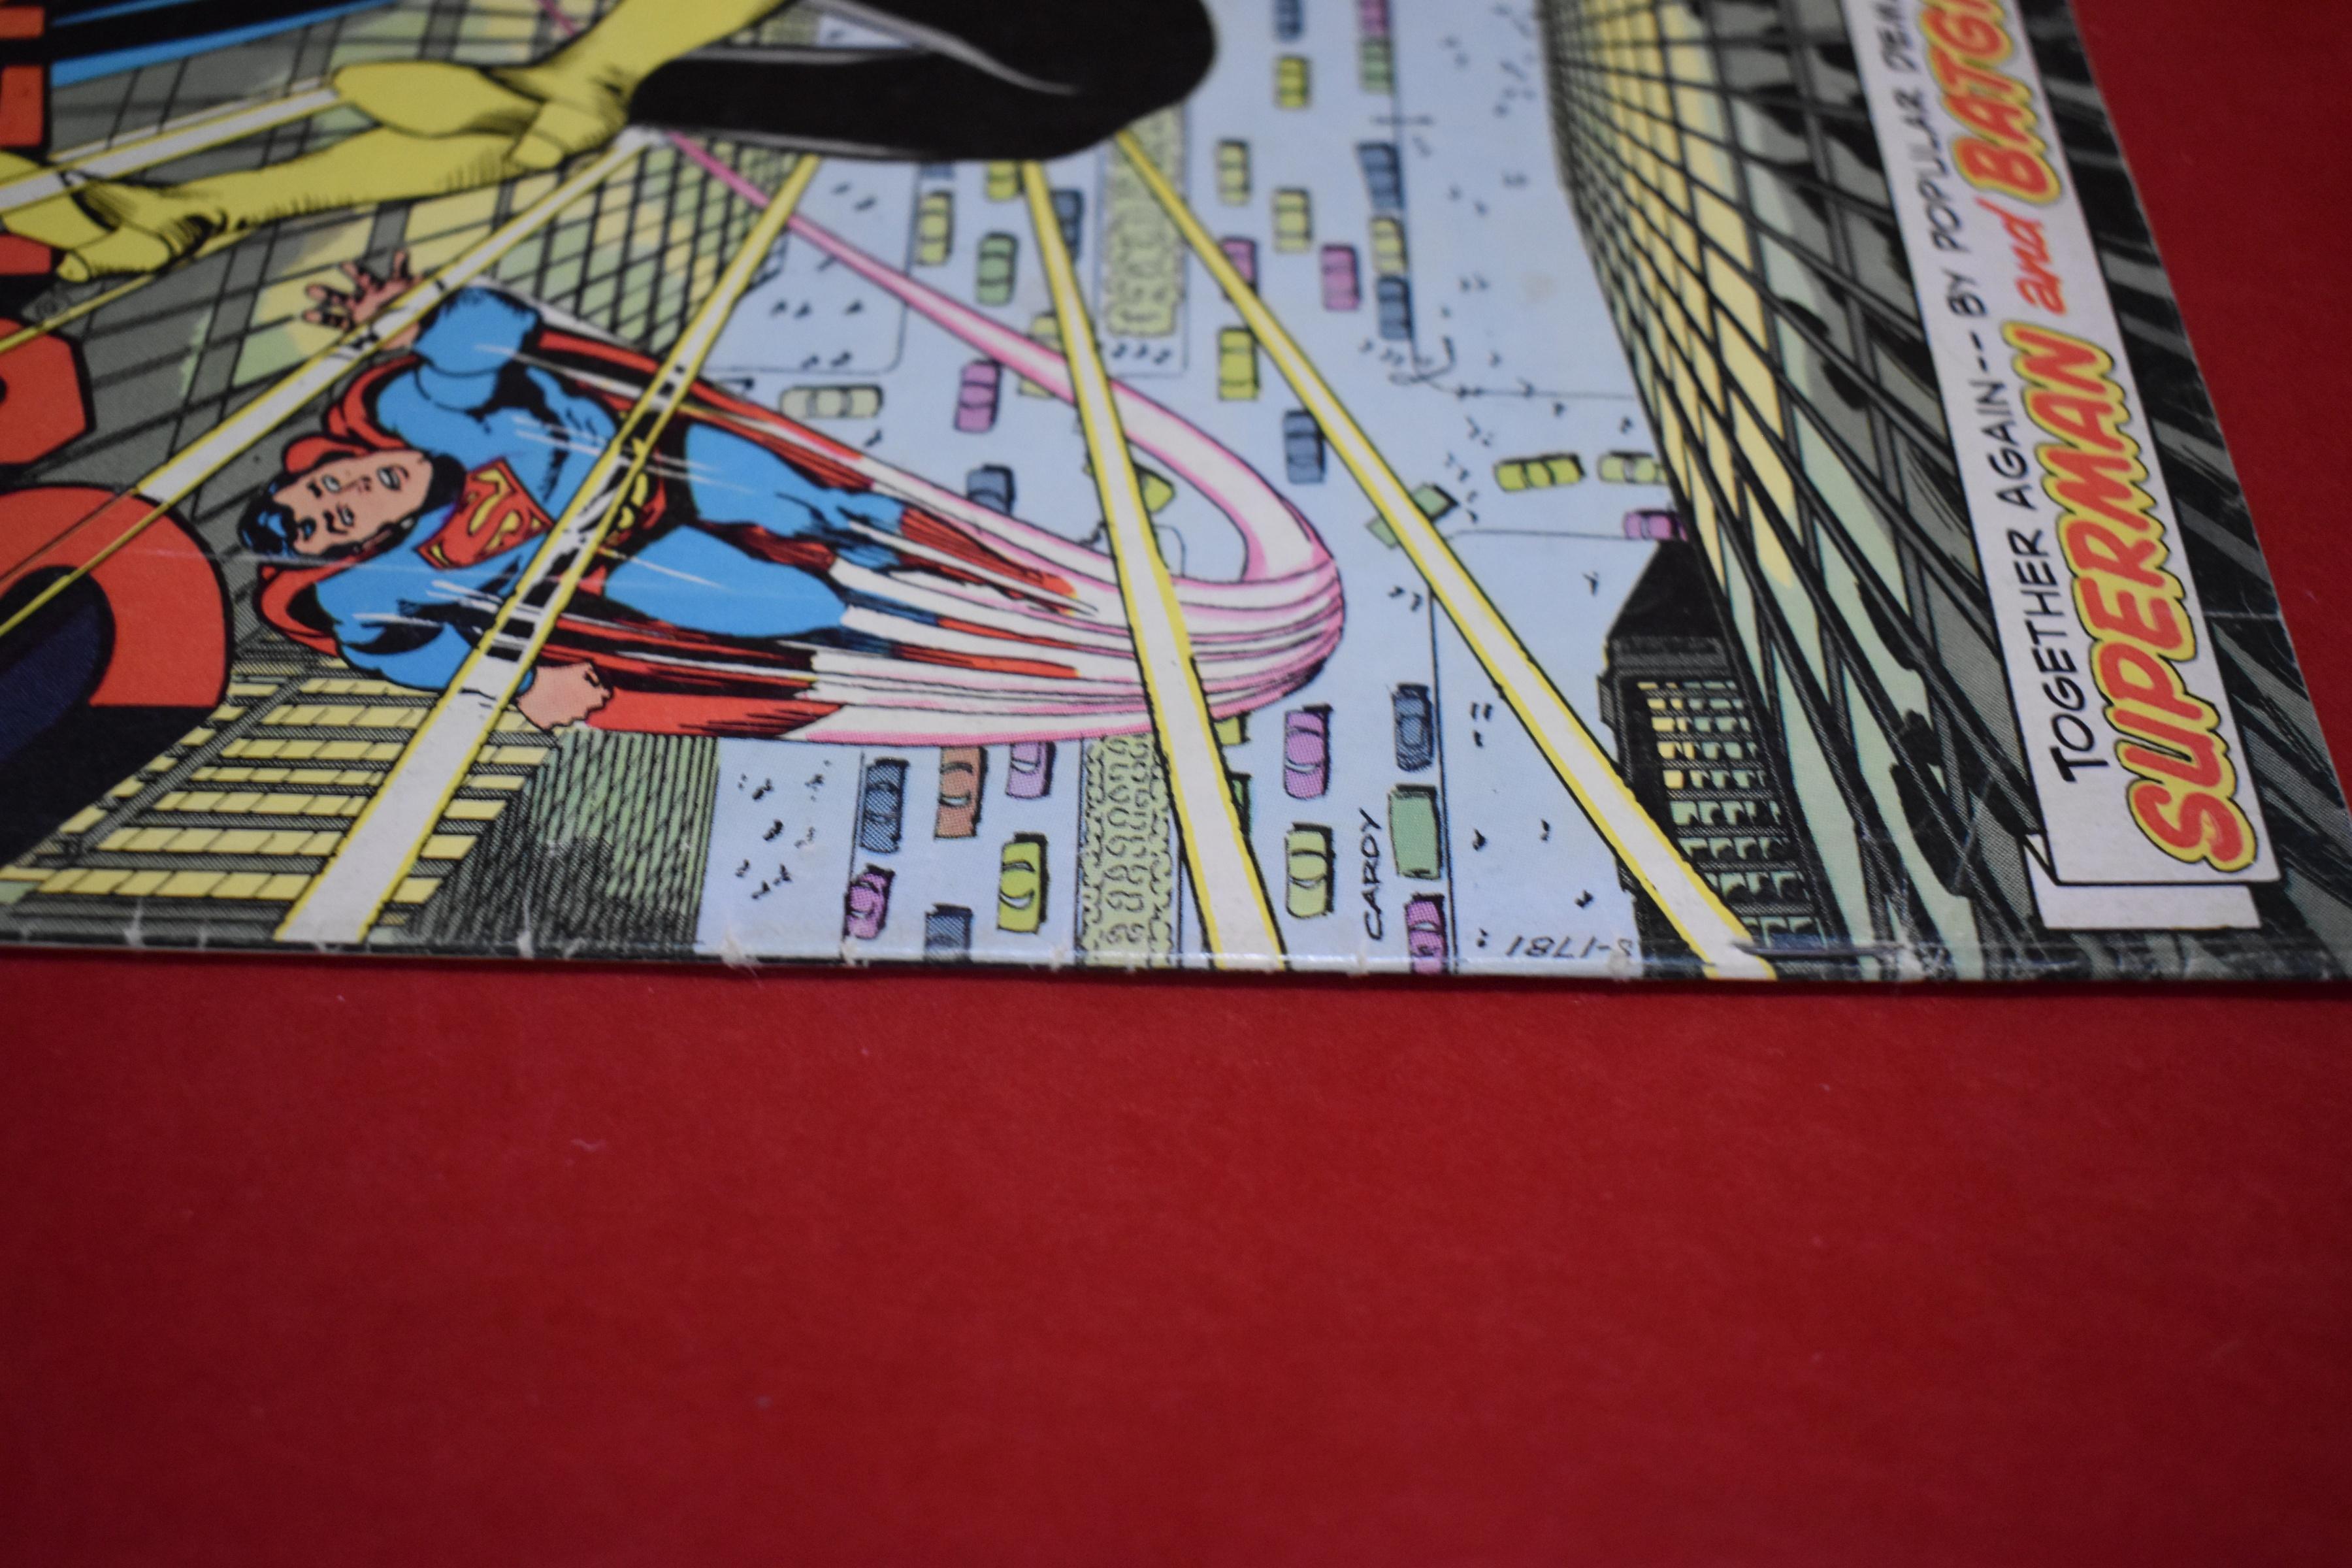 SUPERMAN #279 | SUPERMAN & BATGIRL | CLASSIC NICK CARDY - 1974